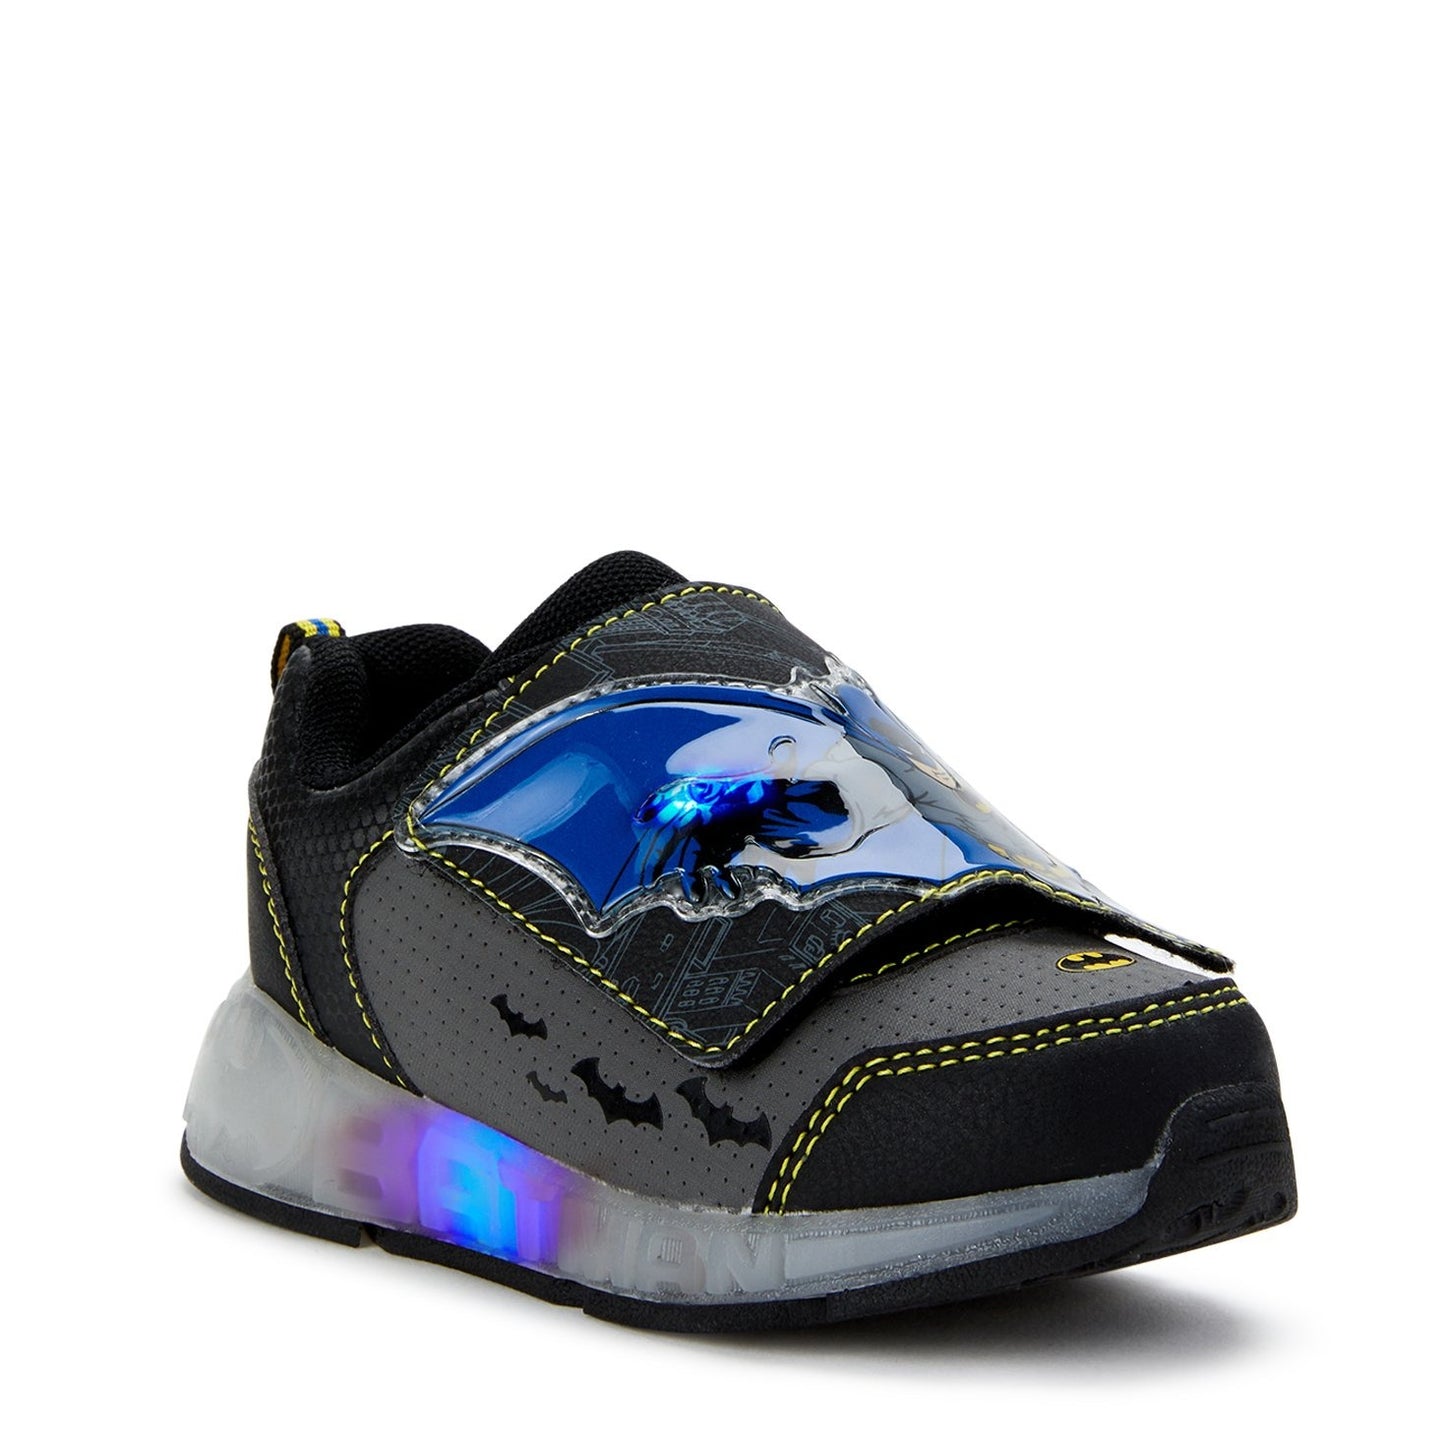 Batman Boys Light Up Sneakers - Black/Blue